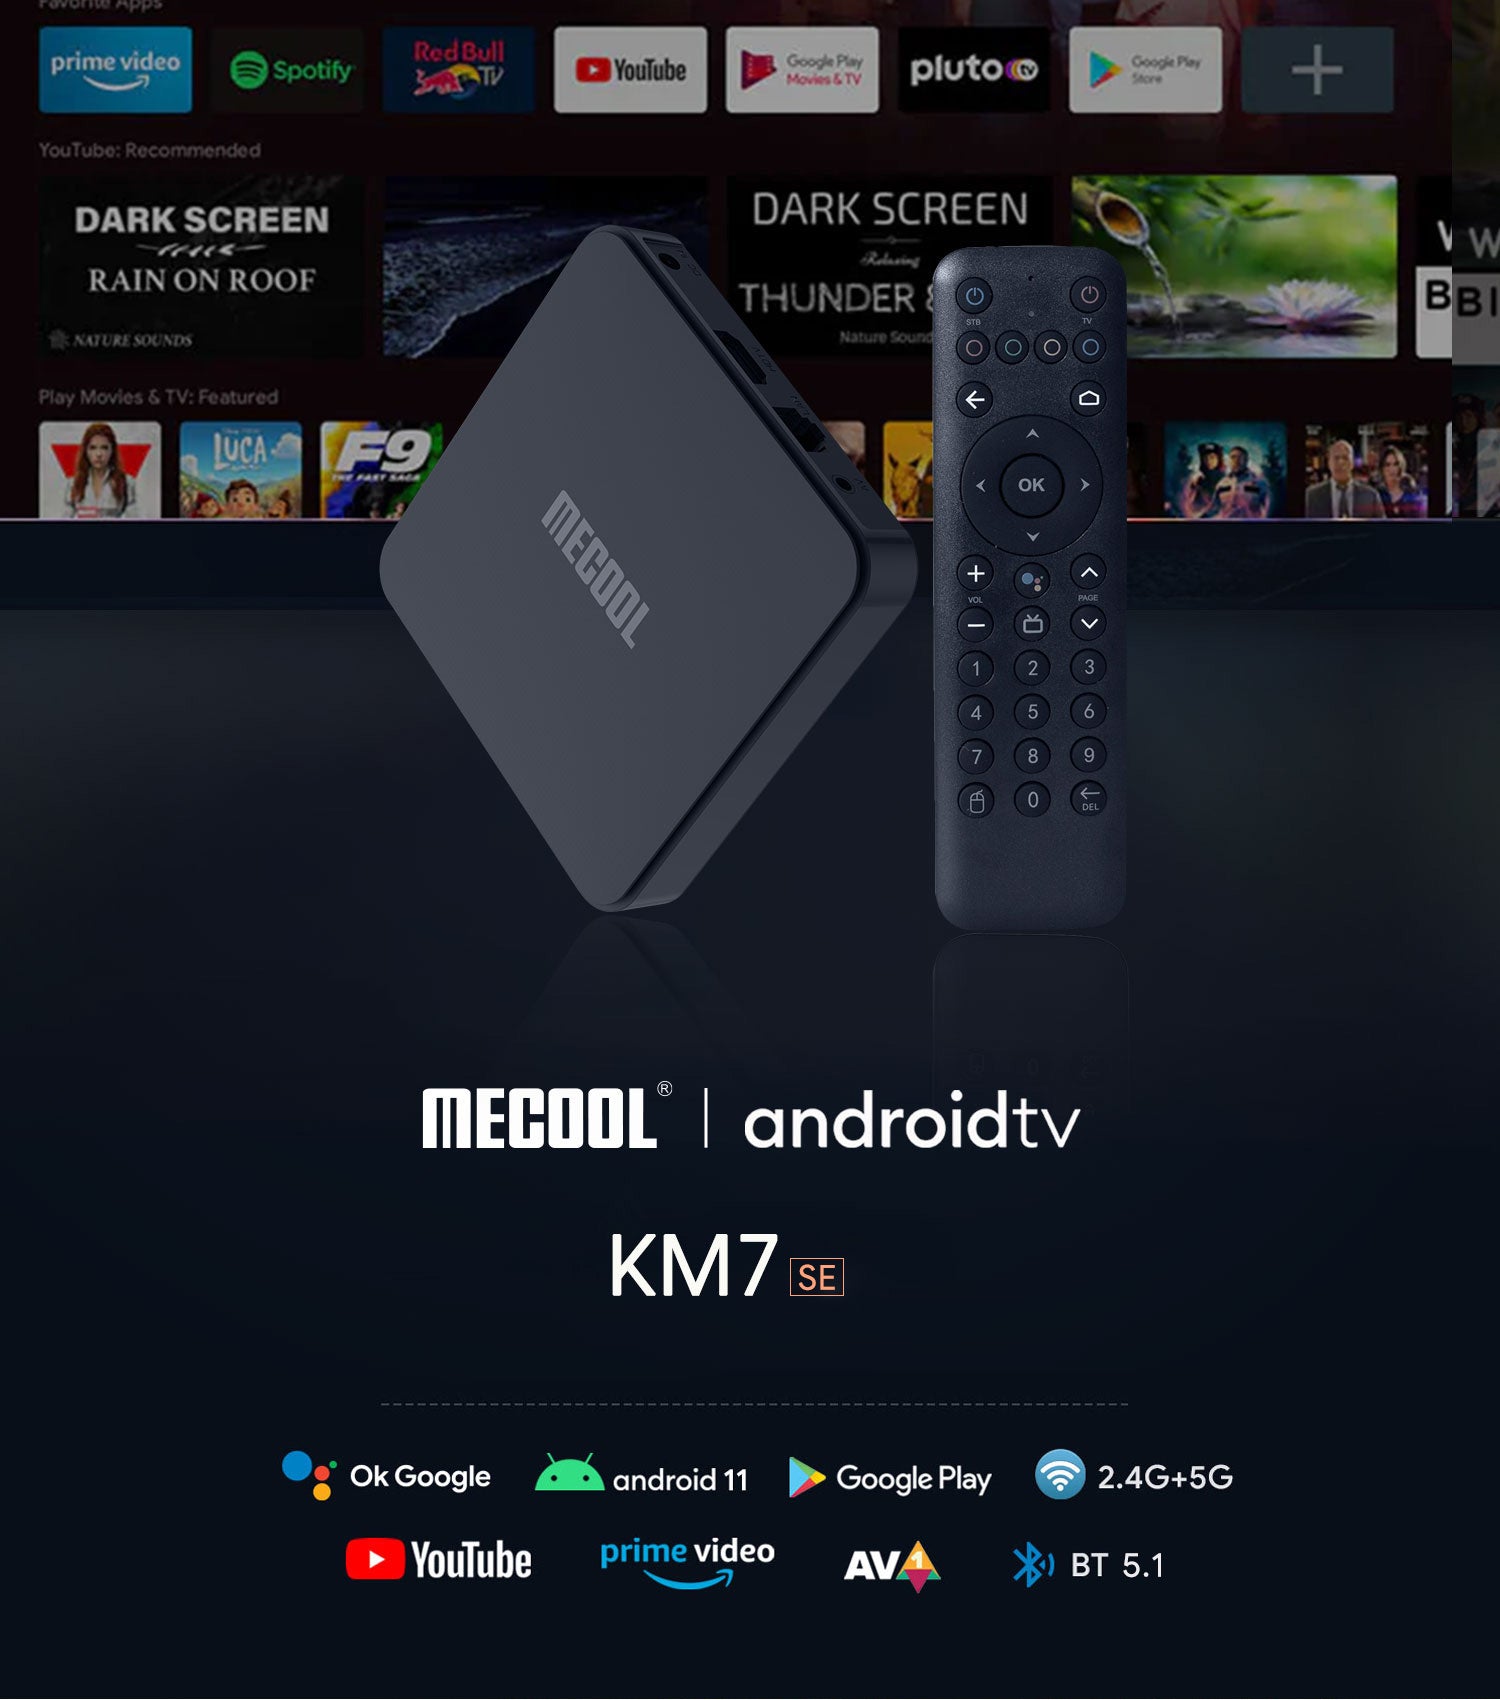 MECOOL KM7 SE Android TV Box